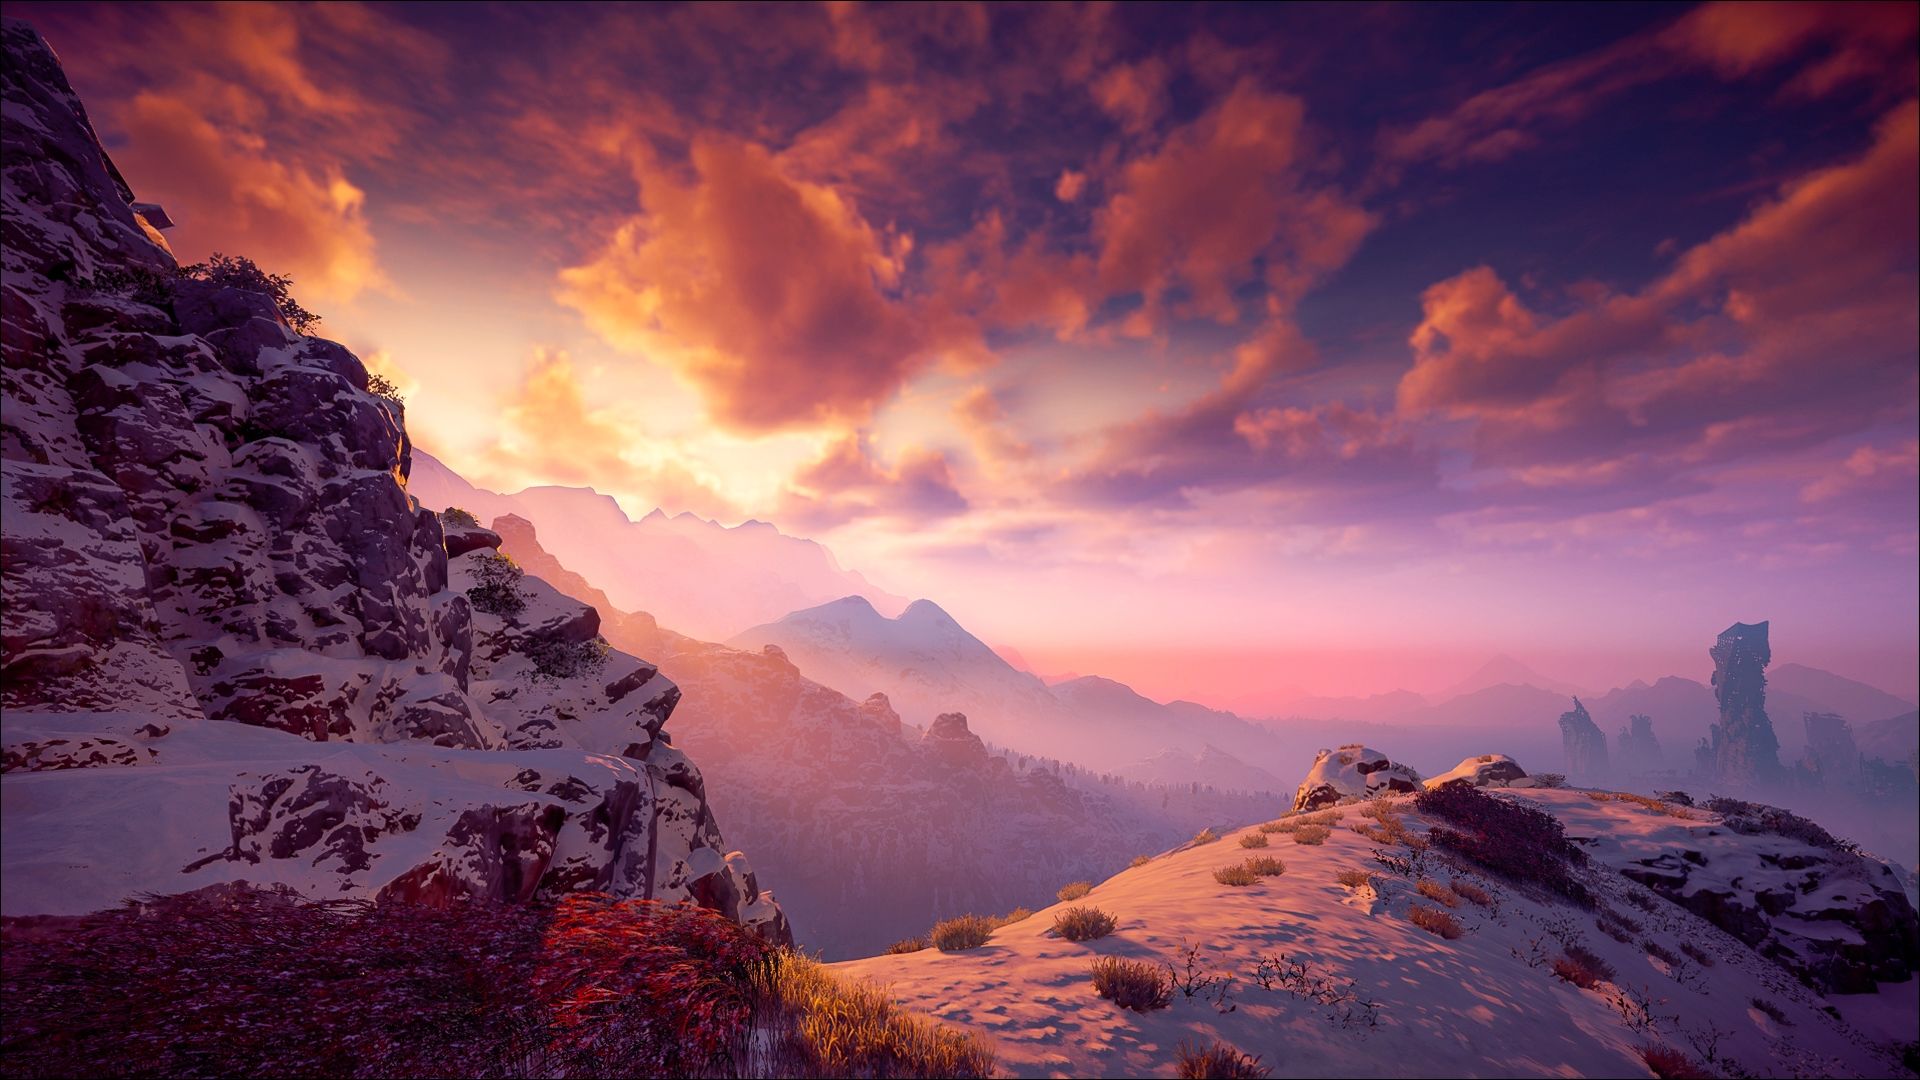 Horizon Zero Dawn VII Snowy Mountains Wallpaper, HD Games 4K Wallpaper, Image, Photo and Background